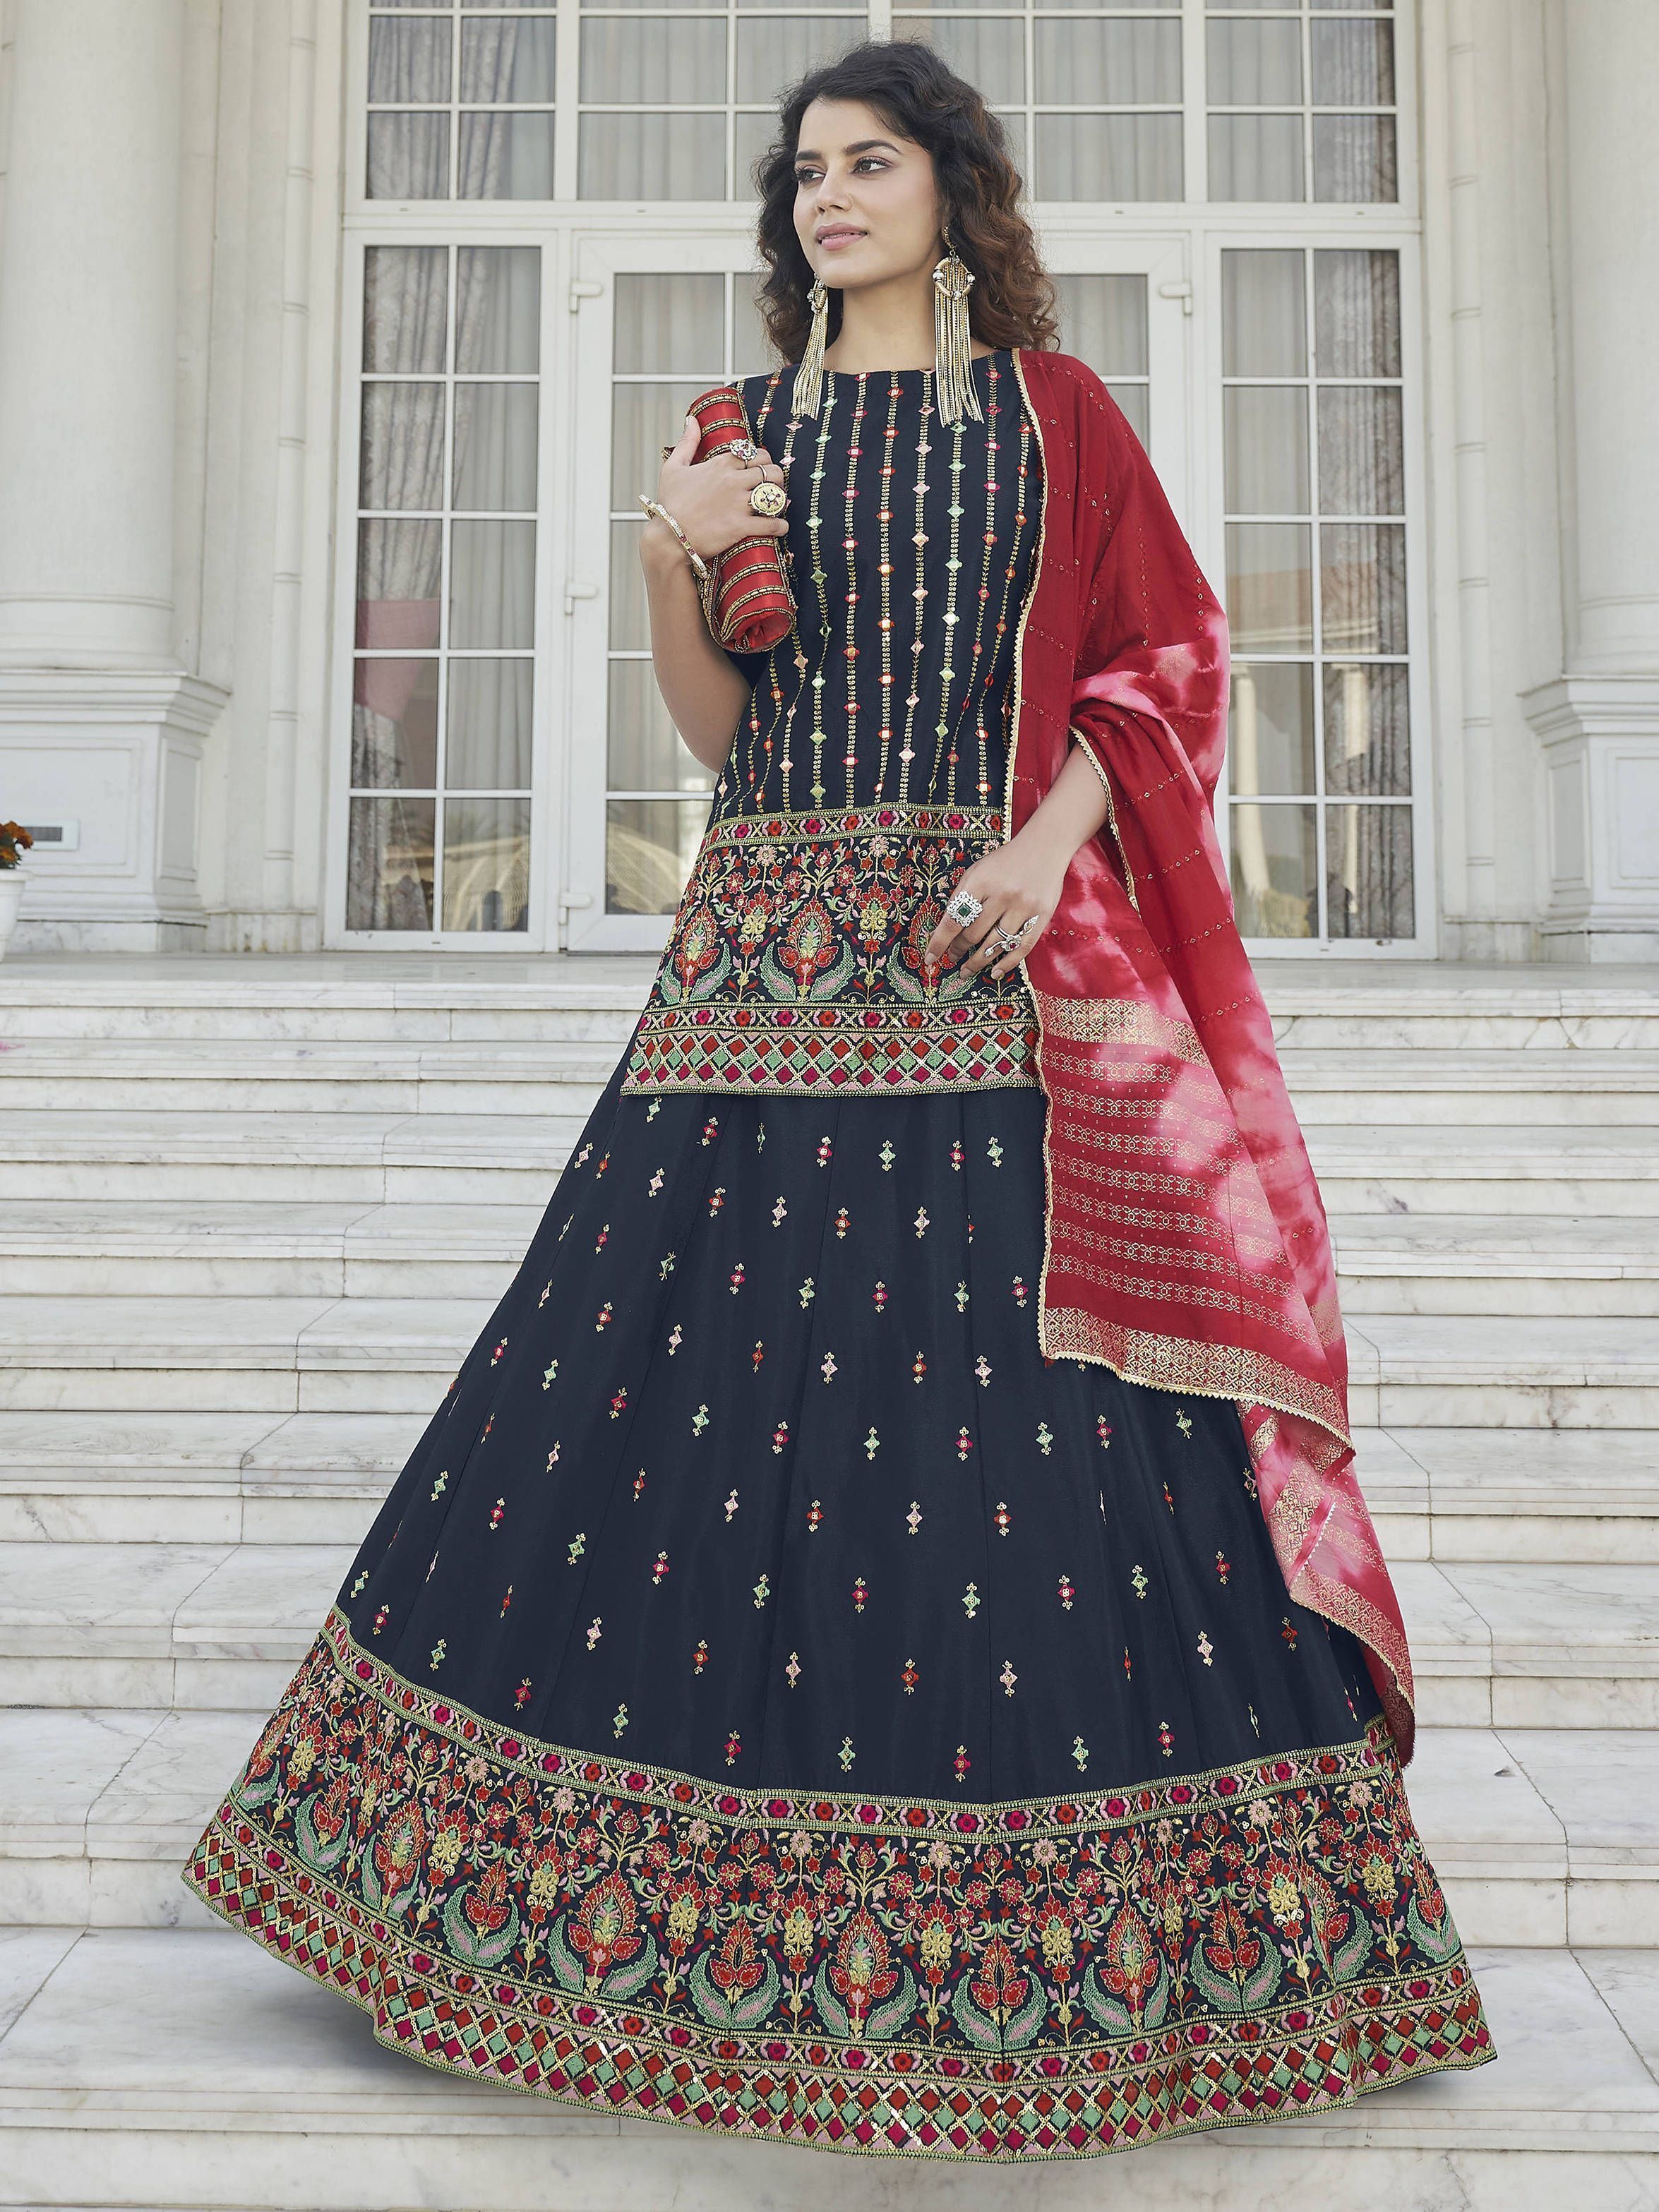 Buy Rajasthani Look Women's Half Half 2 Part Lehenga Style Georgette Saree  (Multicolour) at Amazon.in